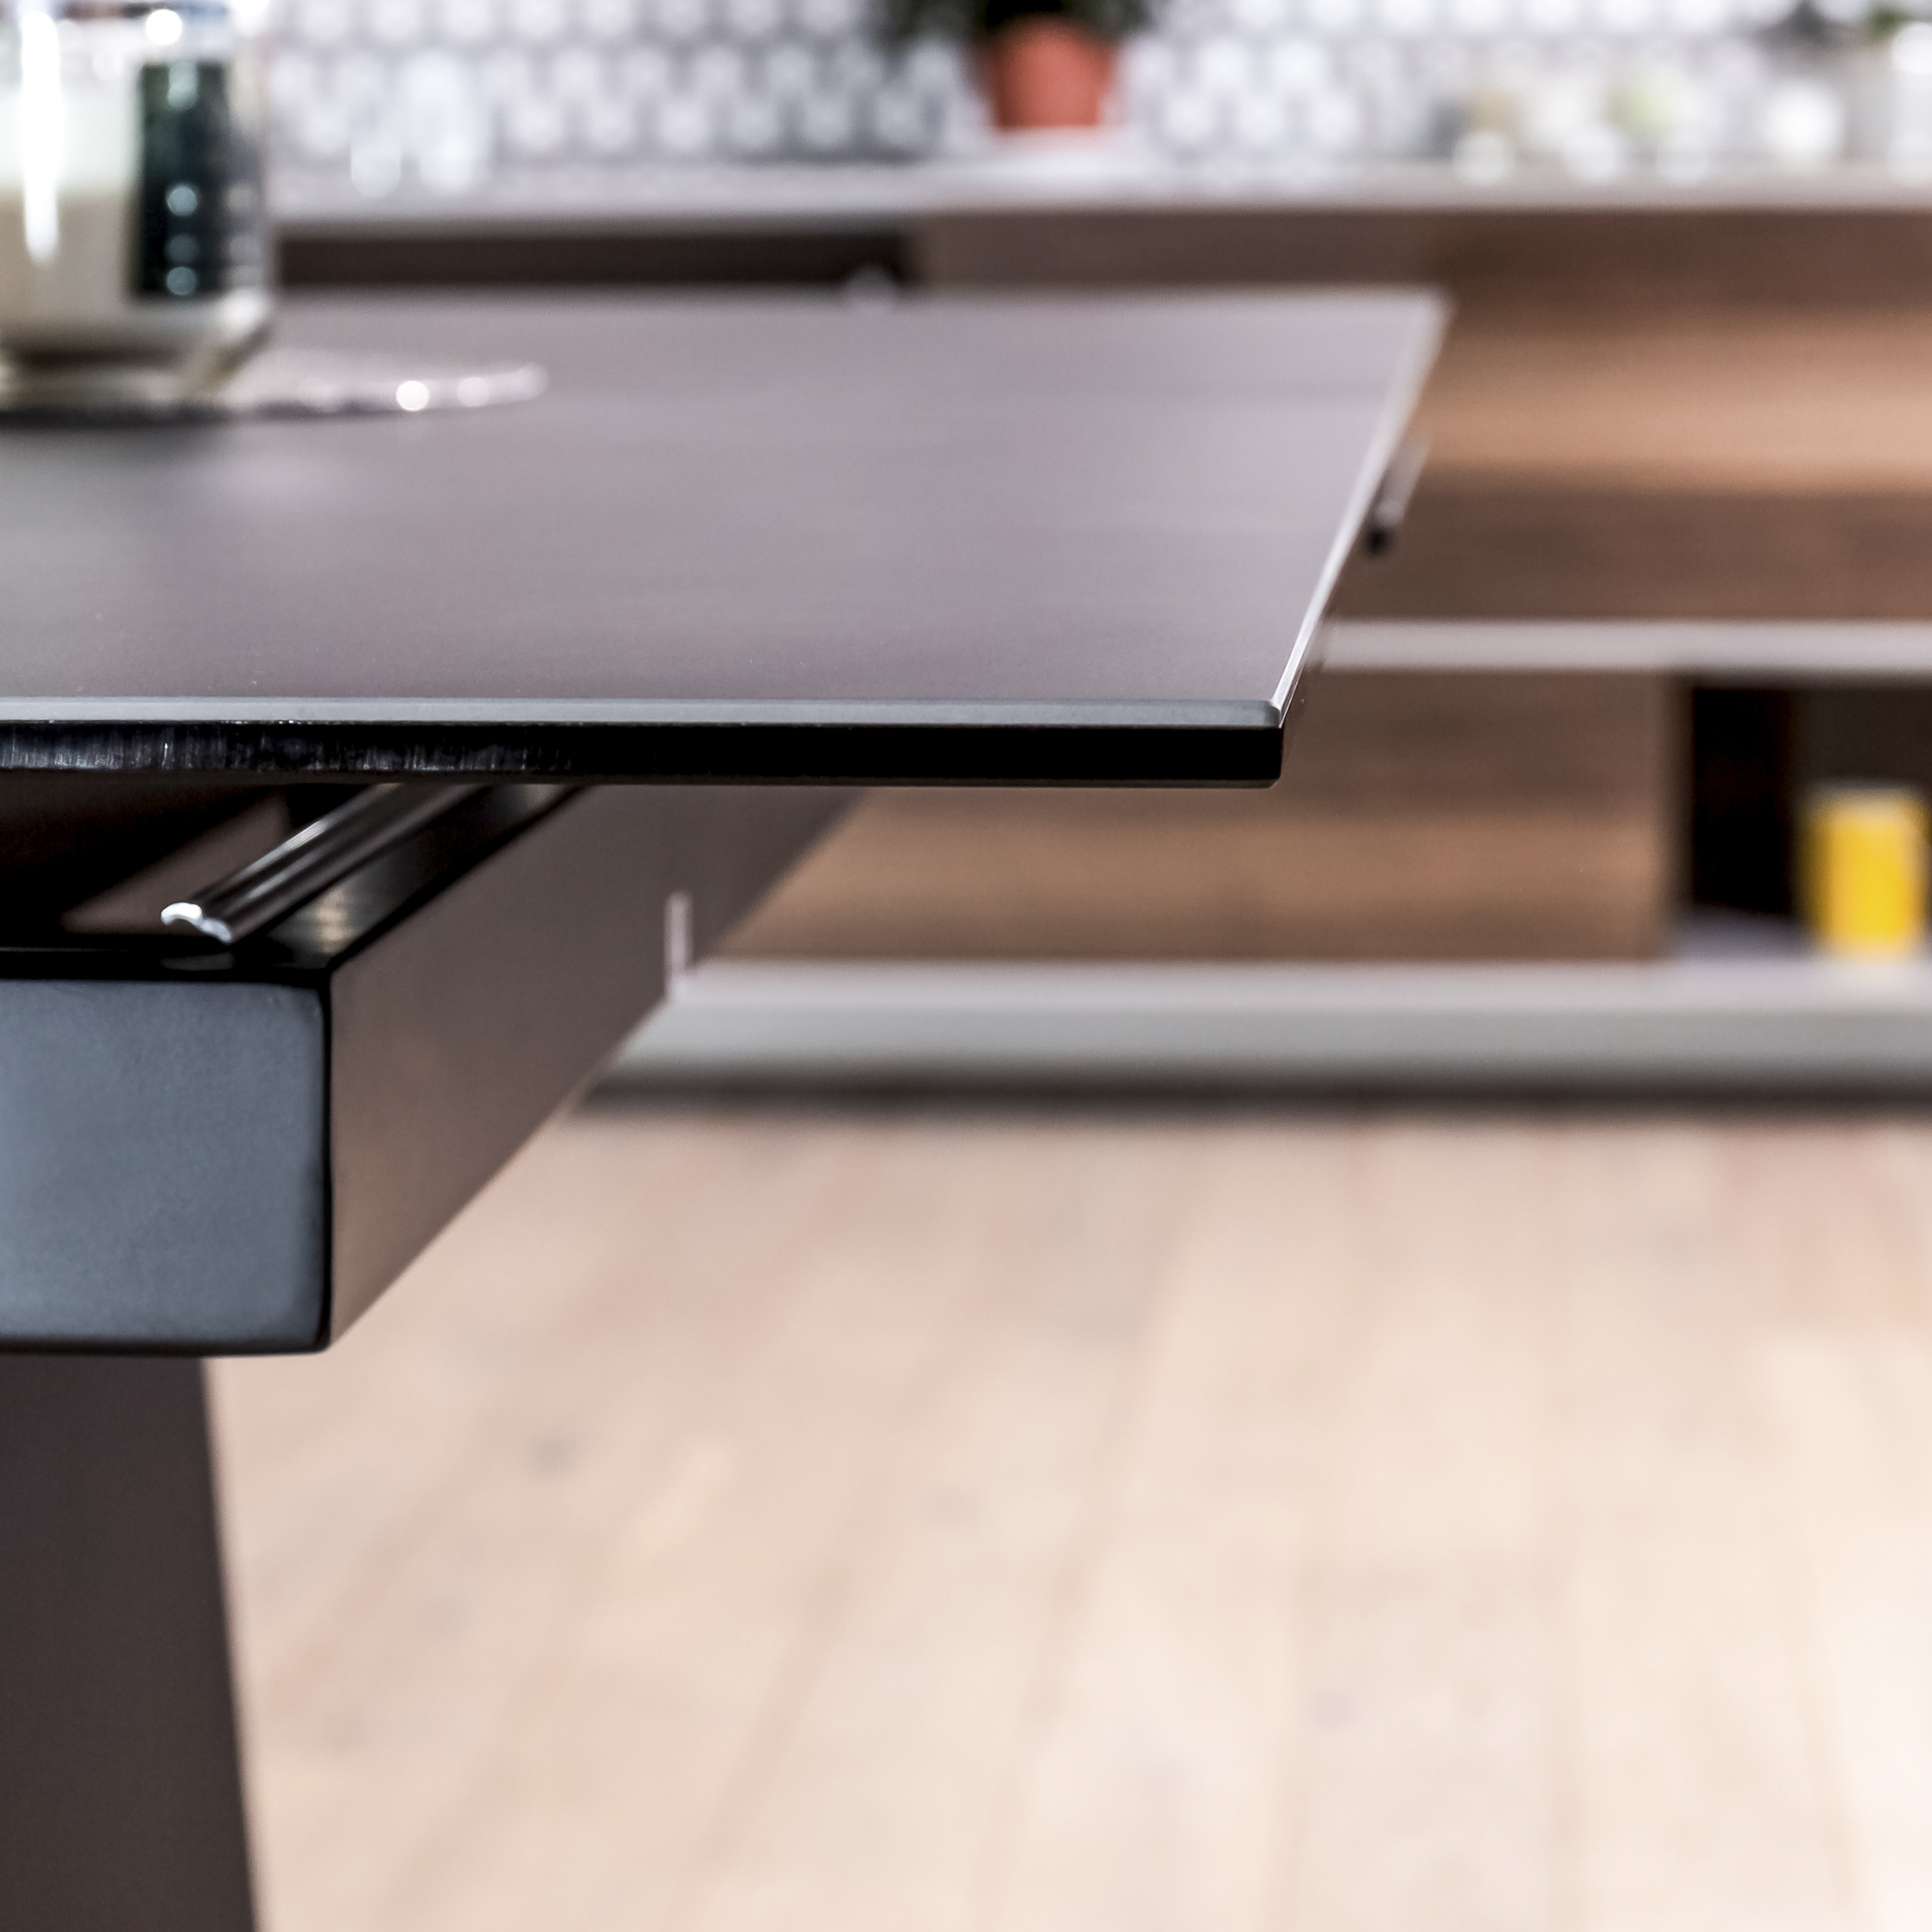 1.8m-2.2m – Casa Grey Ceramic Extending Dining Table